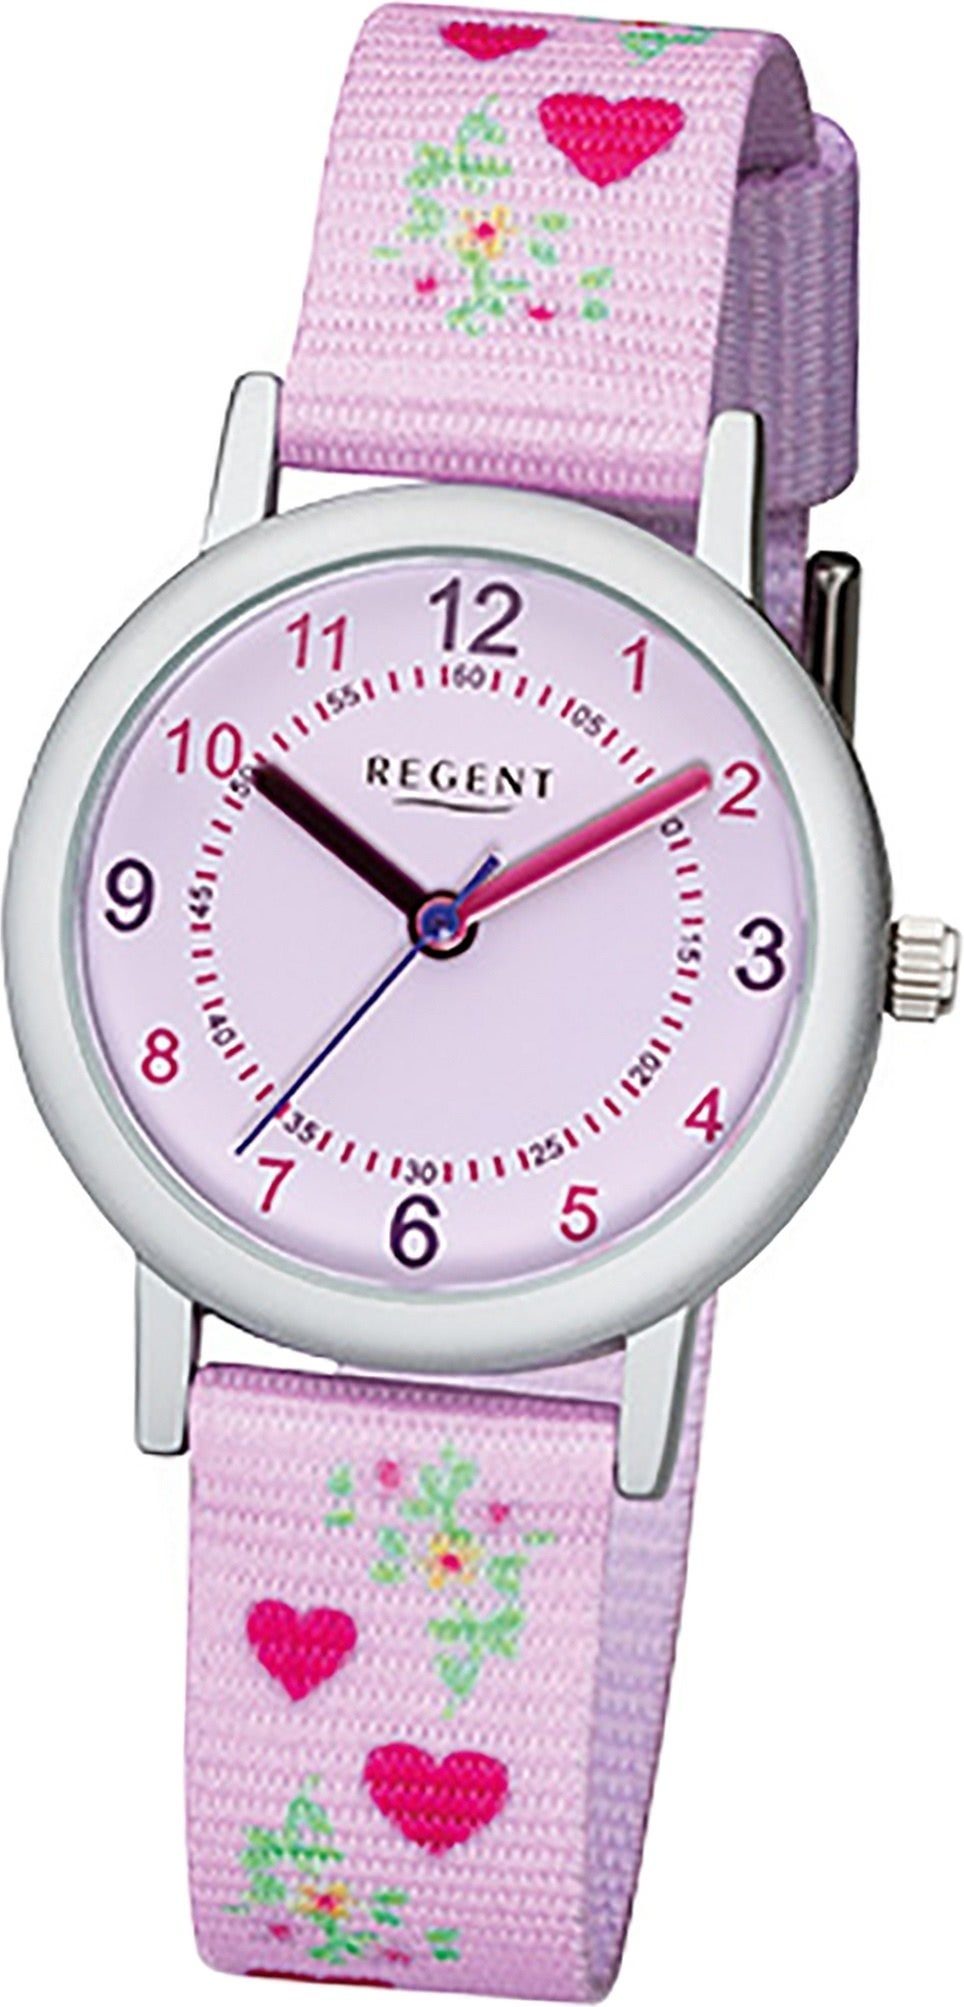 Textil Kinderuhr rosa, Textil, 29mm) (ca. rundes Quarzuhr lila, Stoff Regent Gehäuse, Kinder Regent Uhr Stoffarmband F-1129,